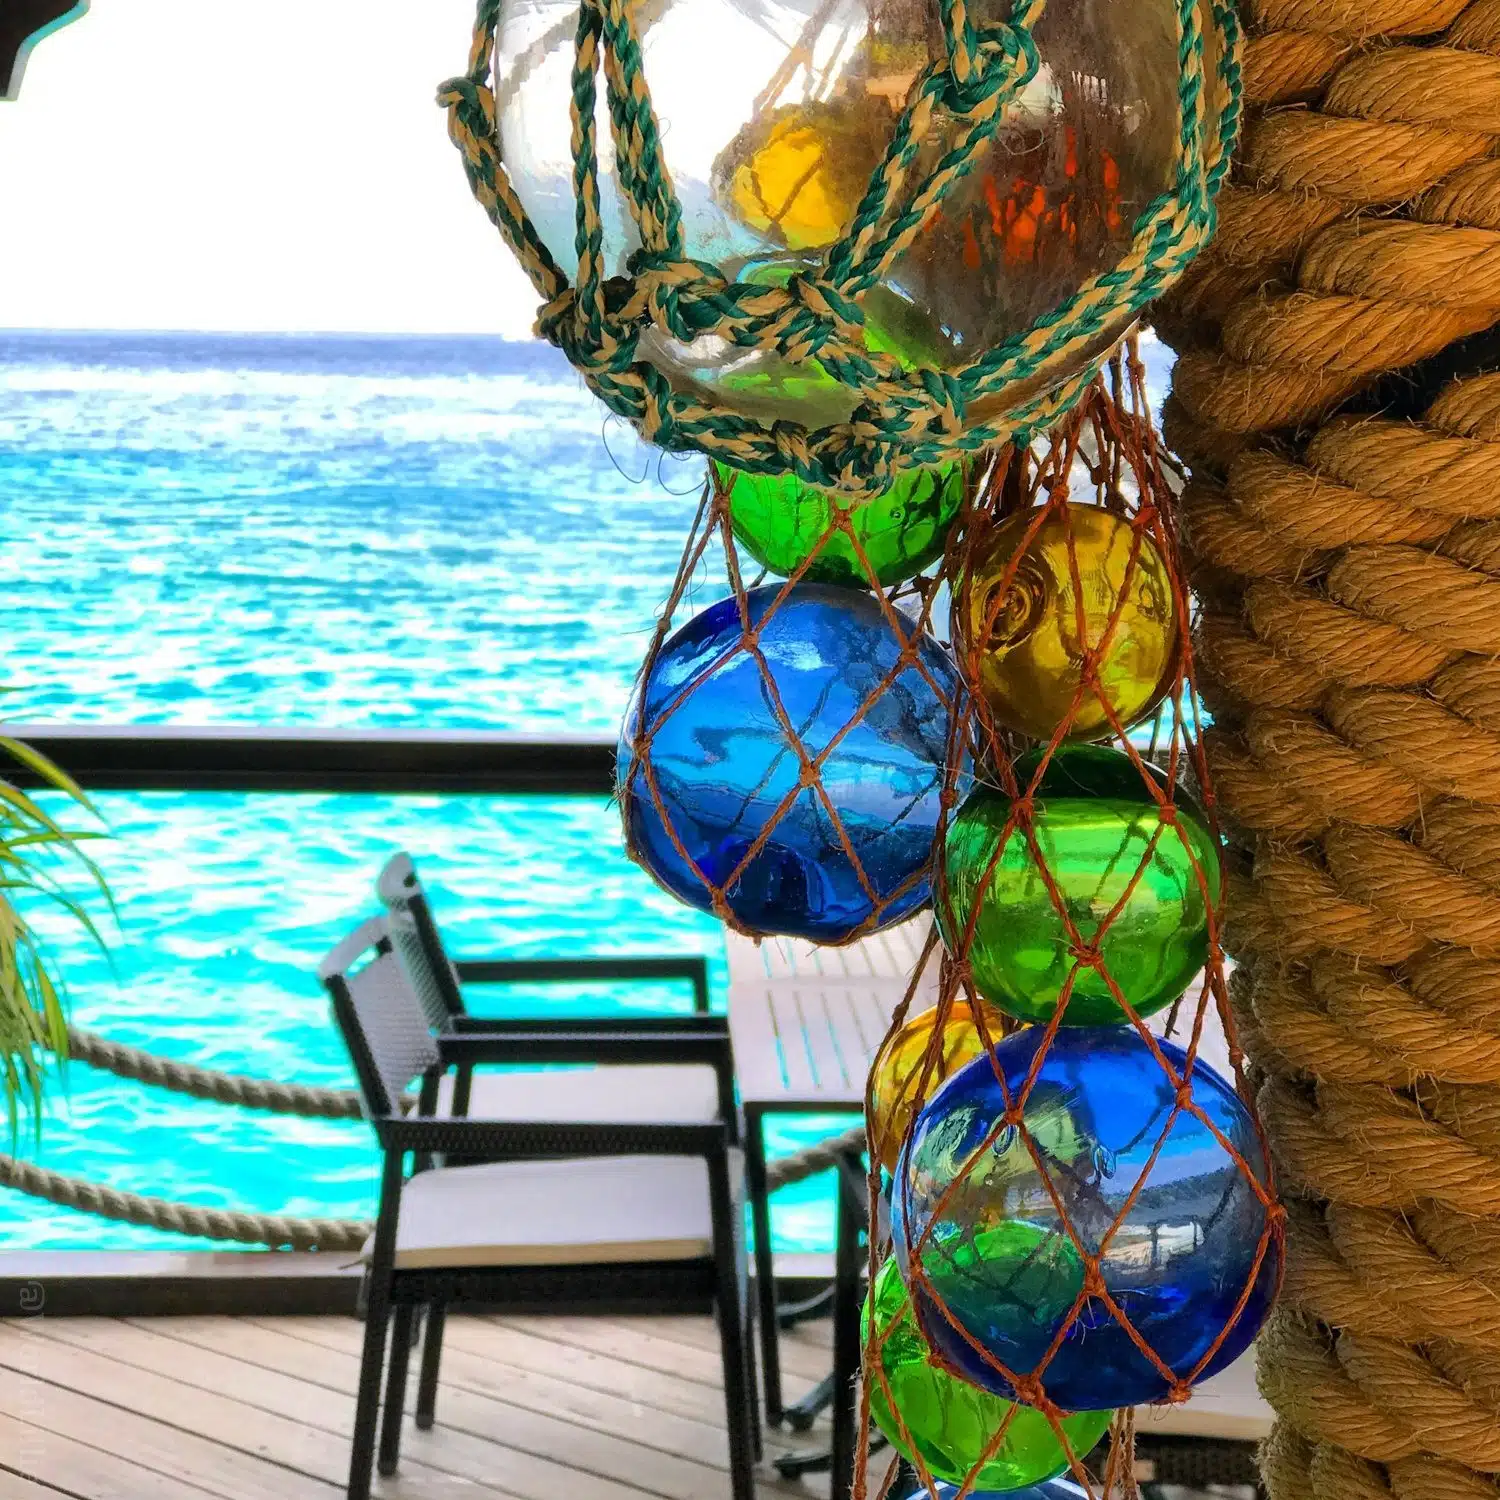 Decorations at "La Balandra" restaurant, surrounded by ocean.